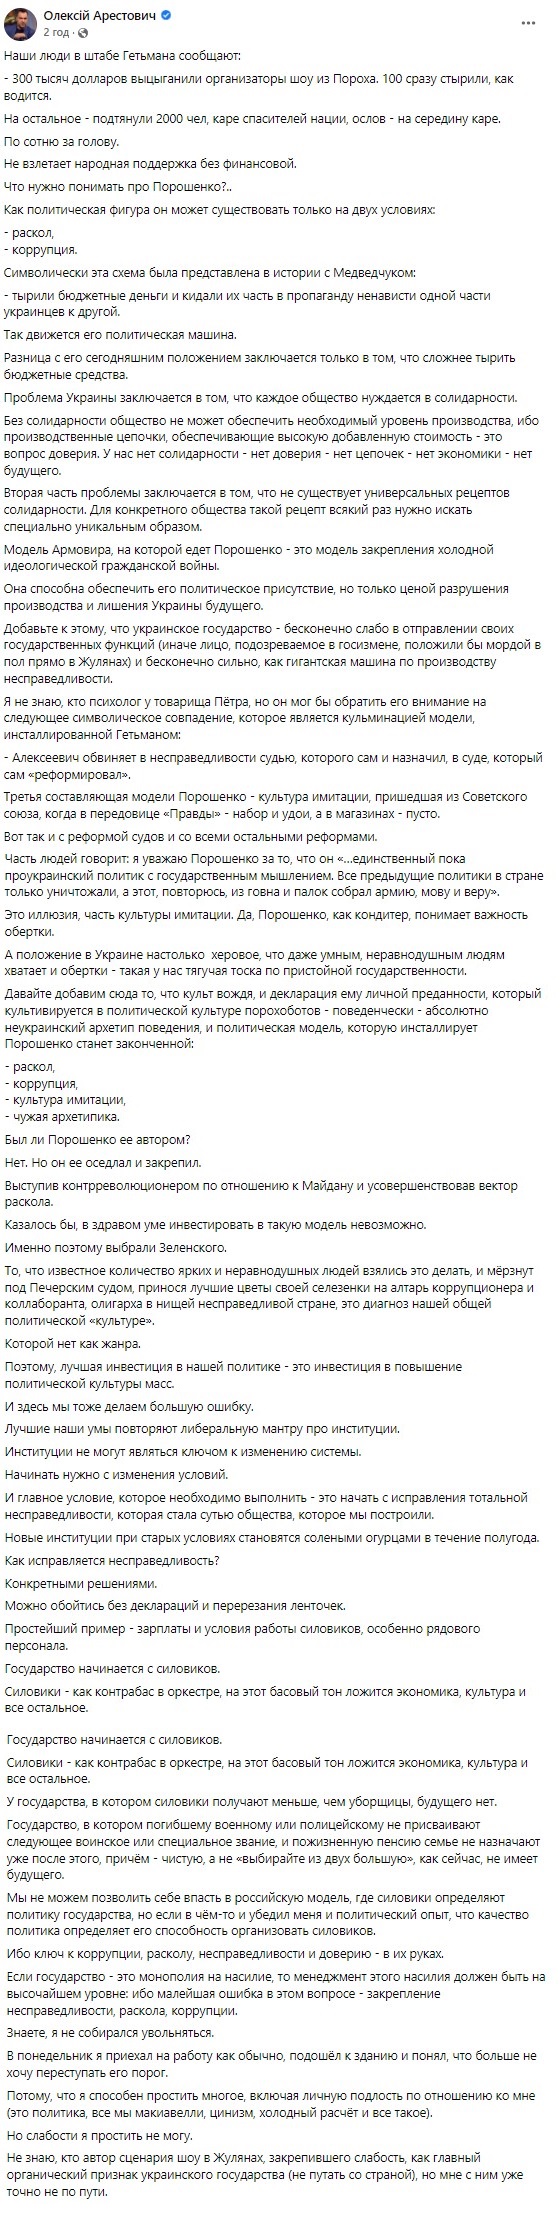 Арестович объяснил свою отставку. Написал о "шоу в Жулянах"